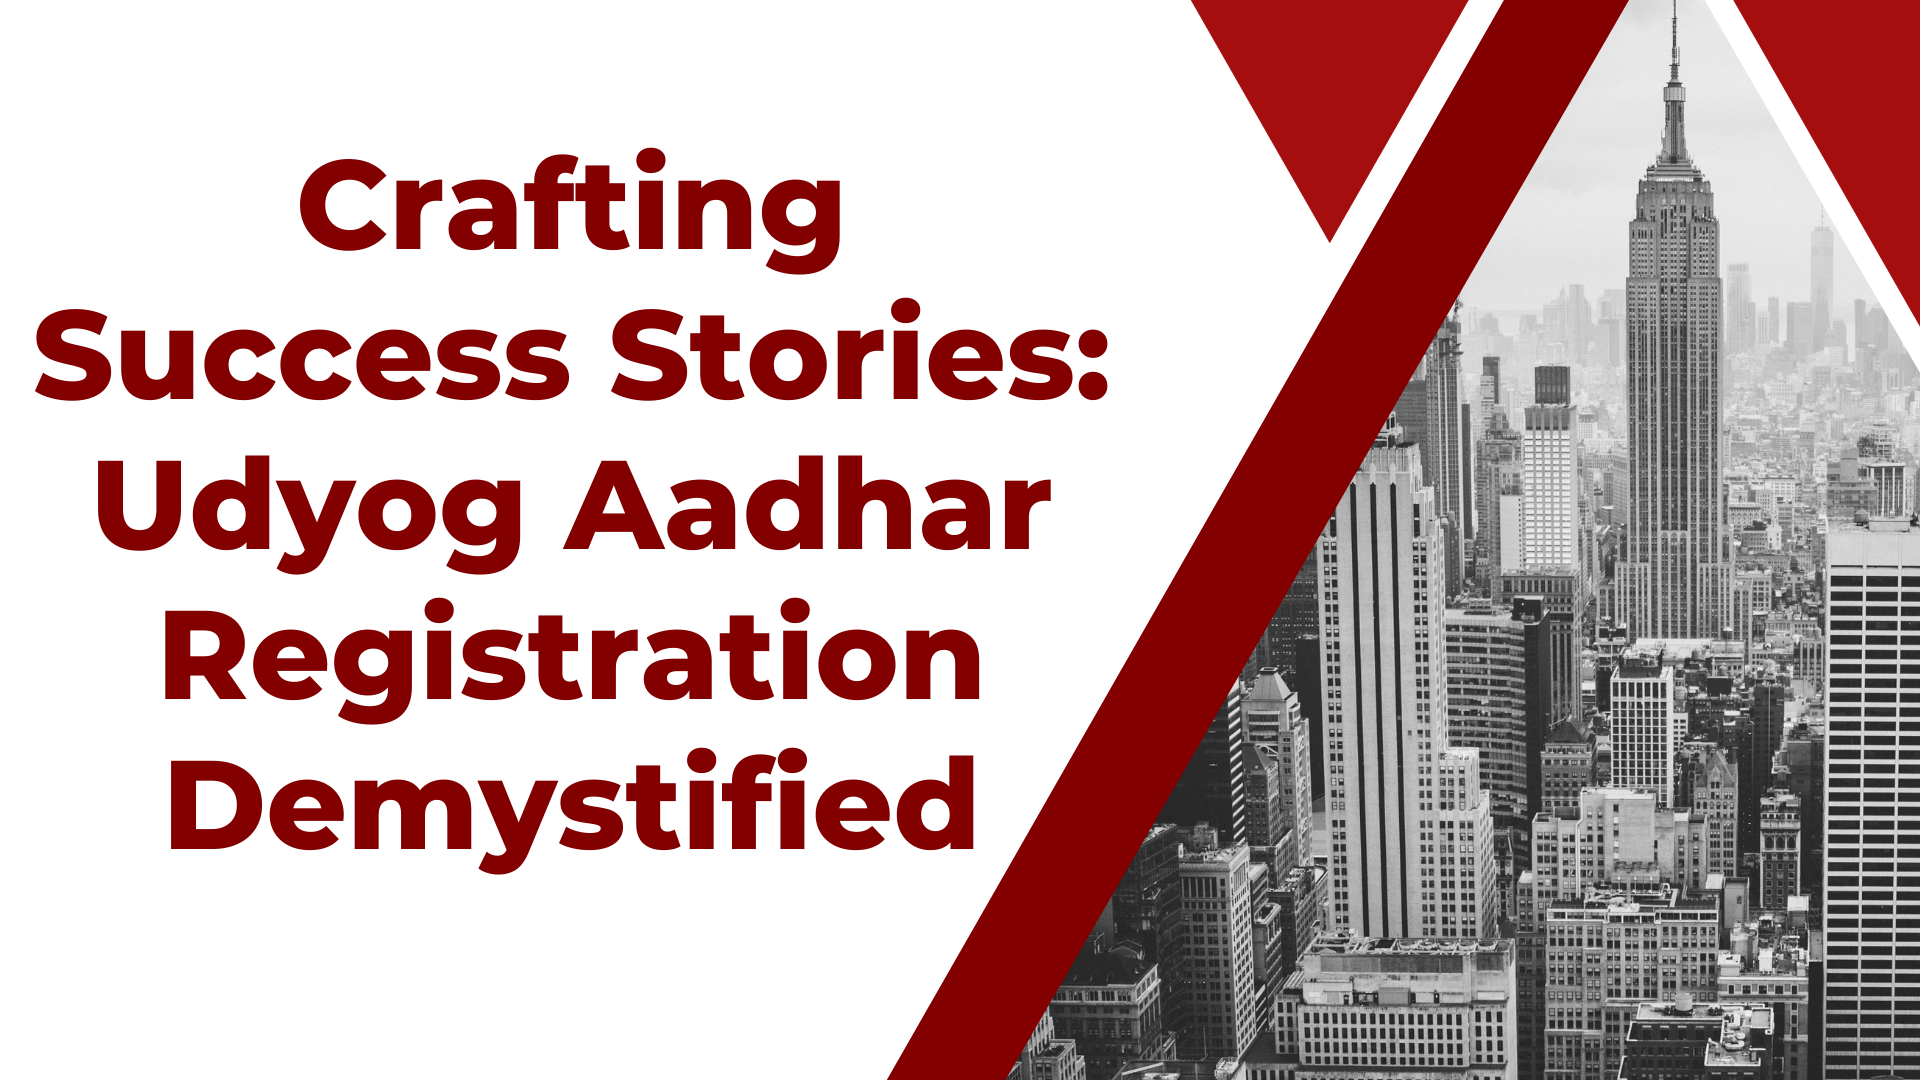 Crafting sucess stories: udyog aadhar registration